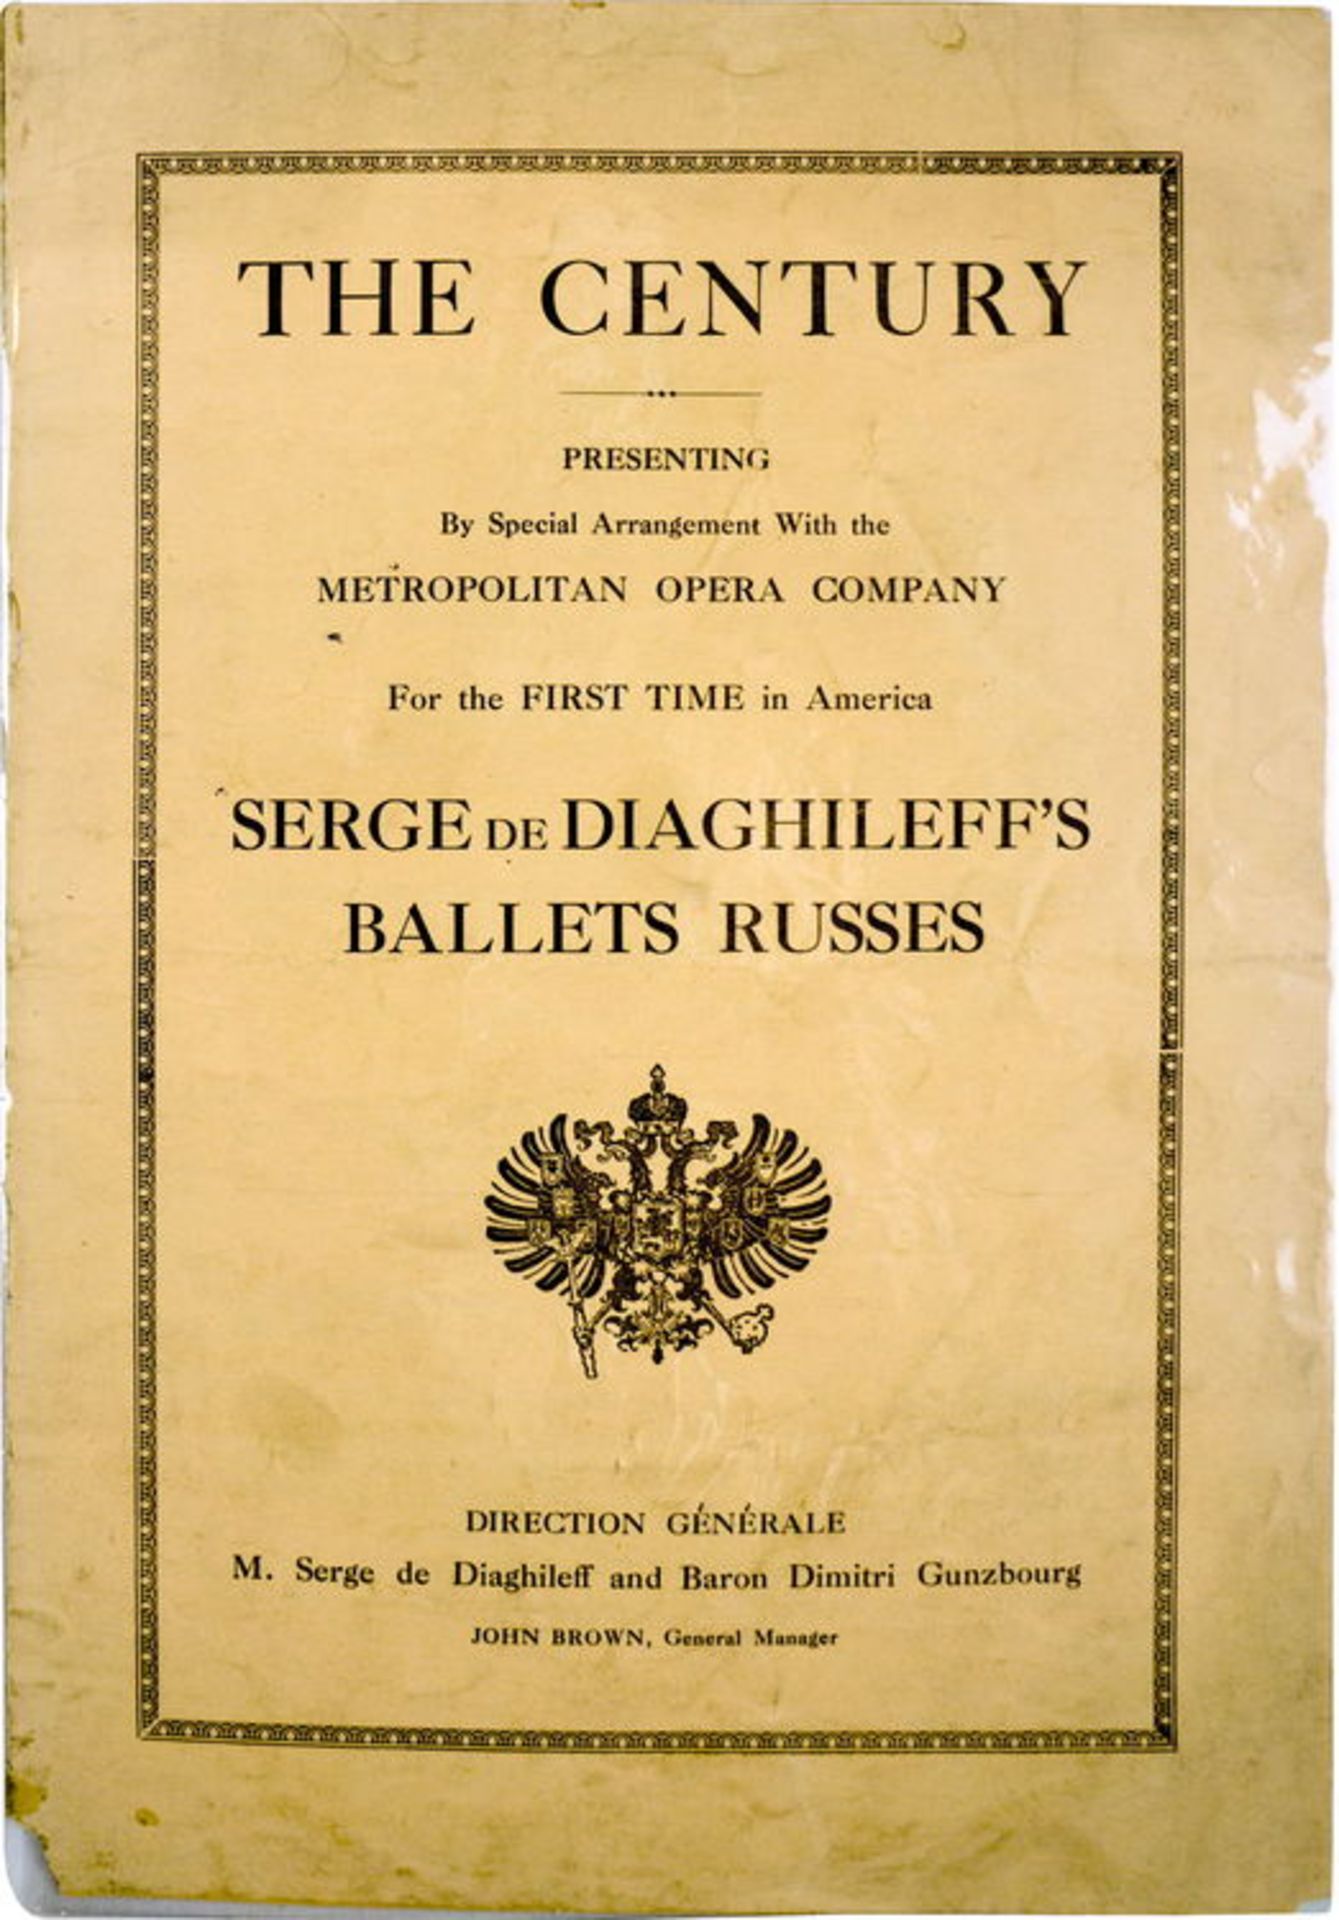 [BALLETS RUSSES] Erste Präsentation Ballets Russes in Amerika, im Century Theatre, 2nd week, 25.